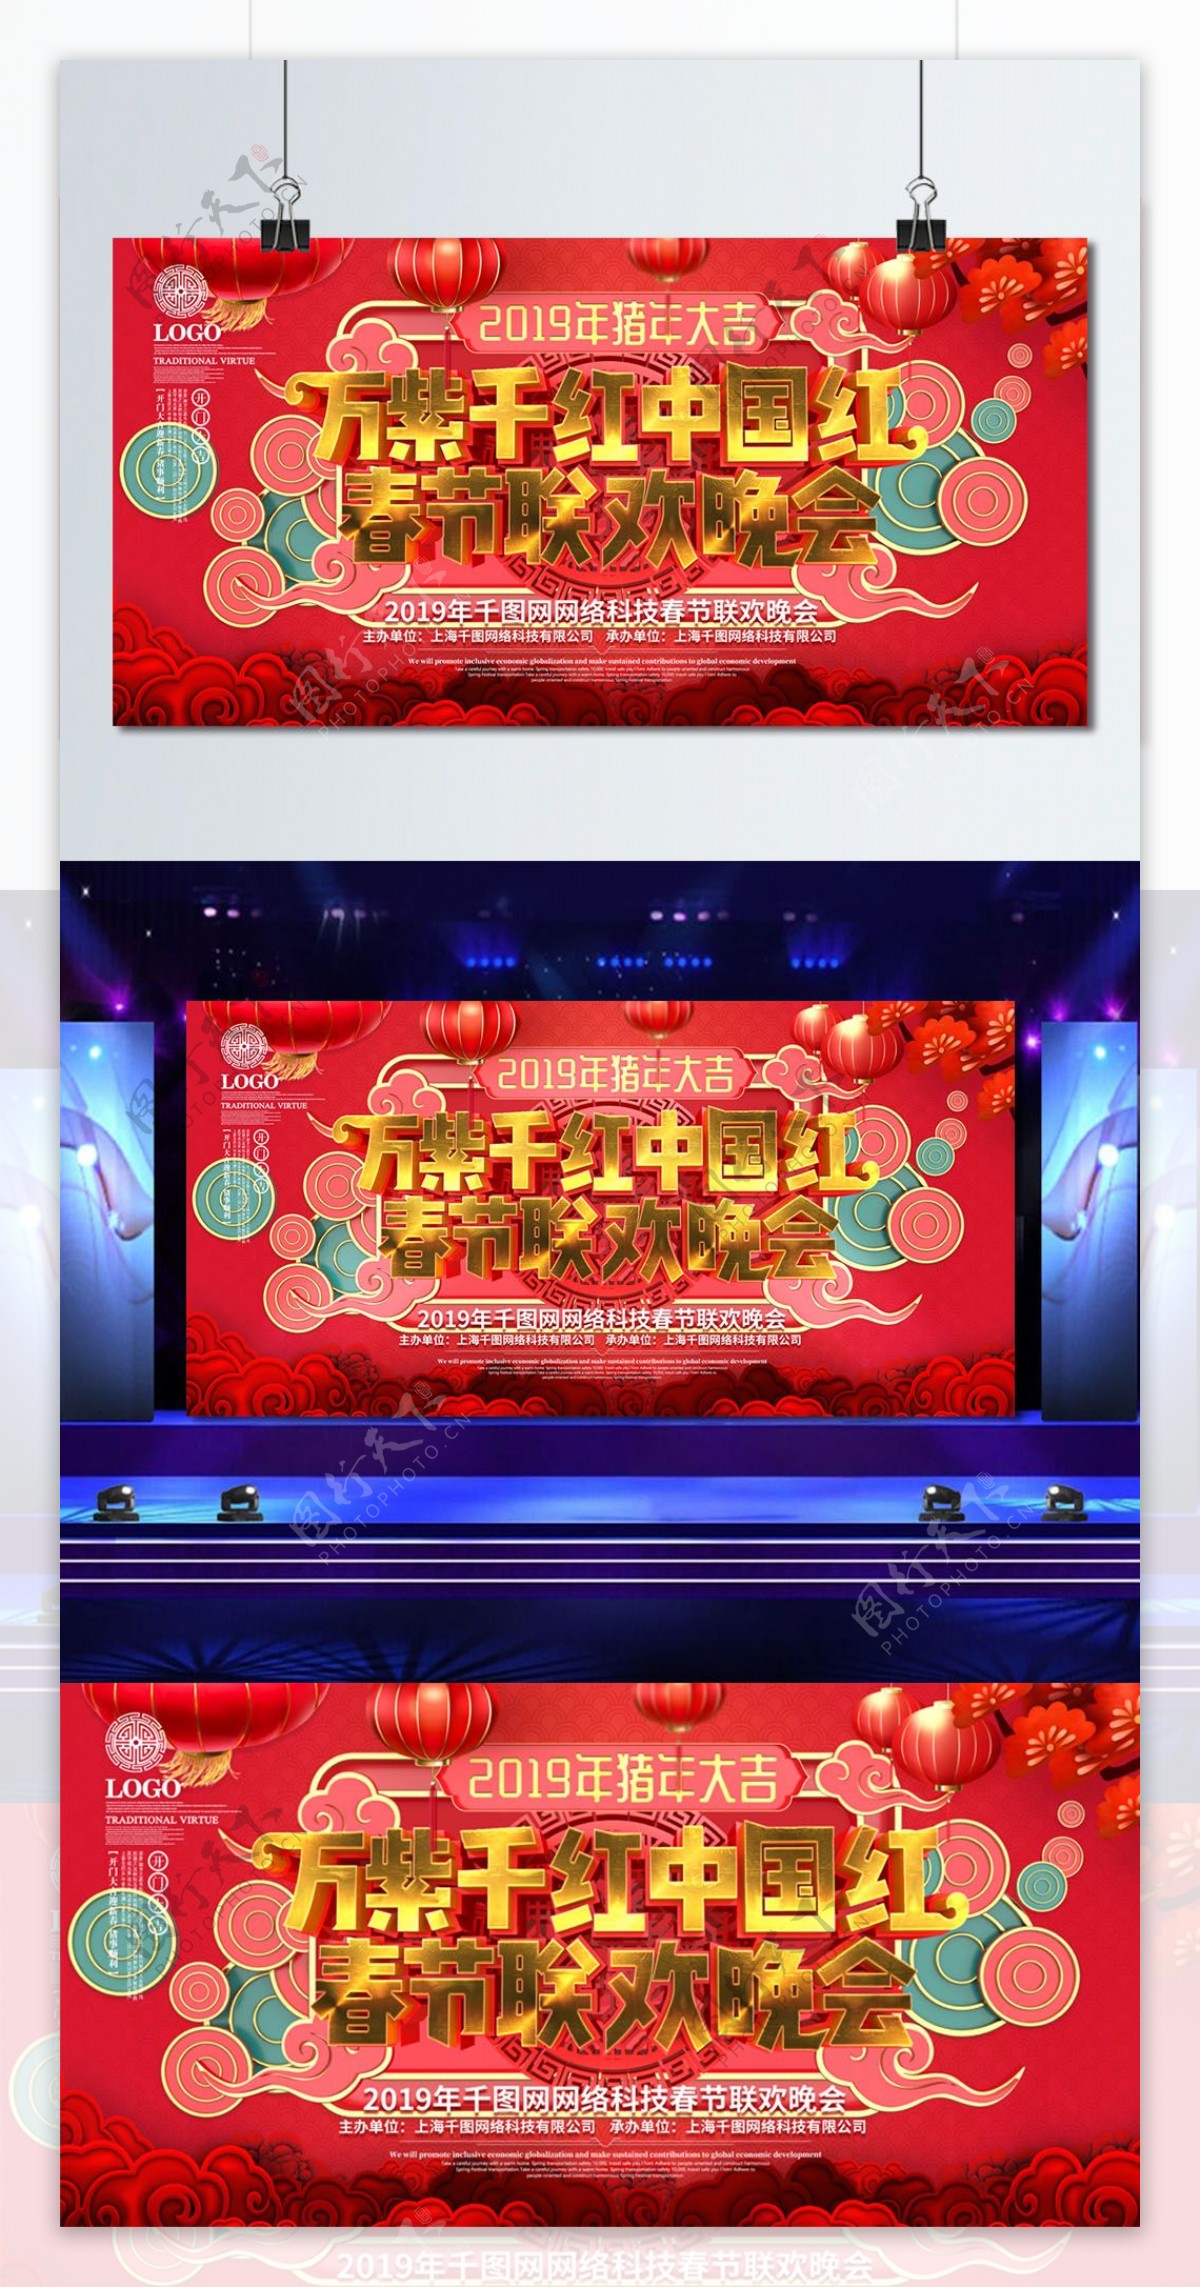 C4D红色春节联欢晚会舞台背景